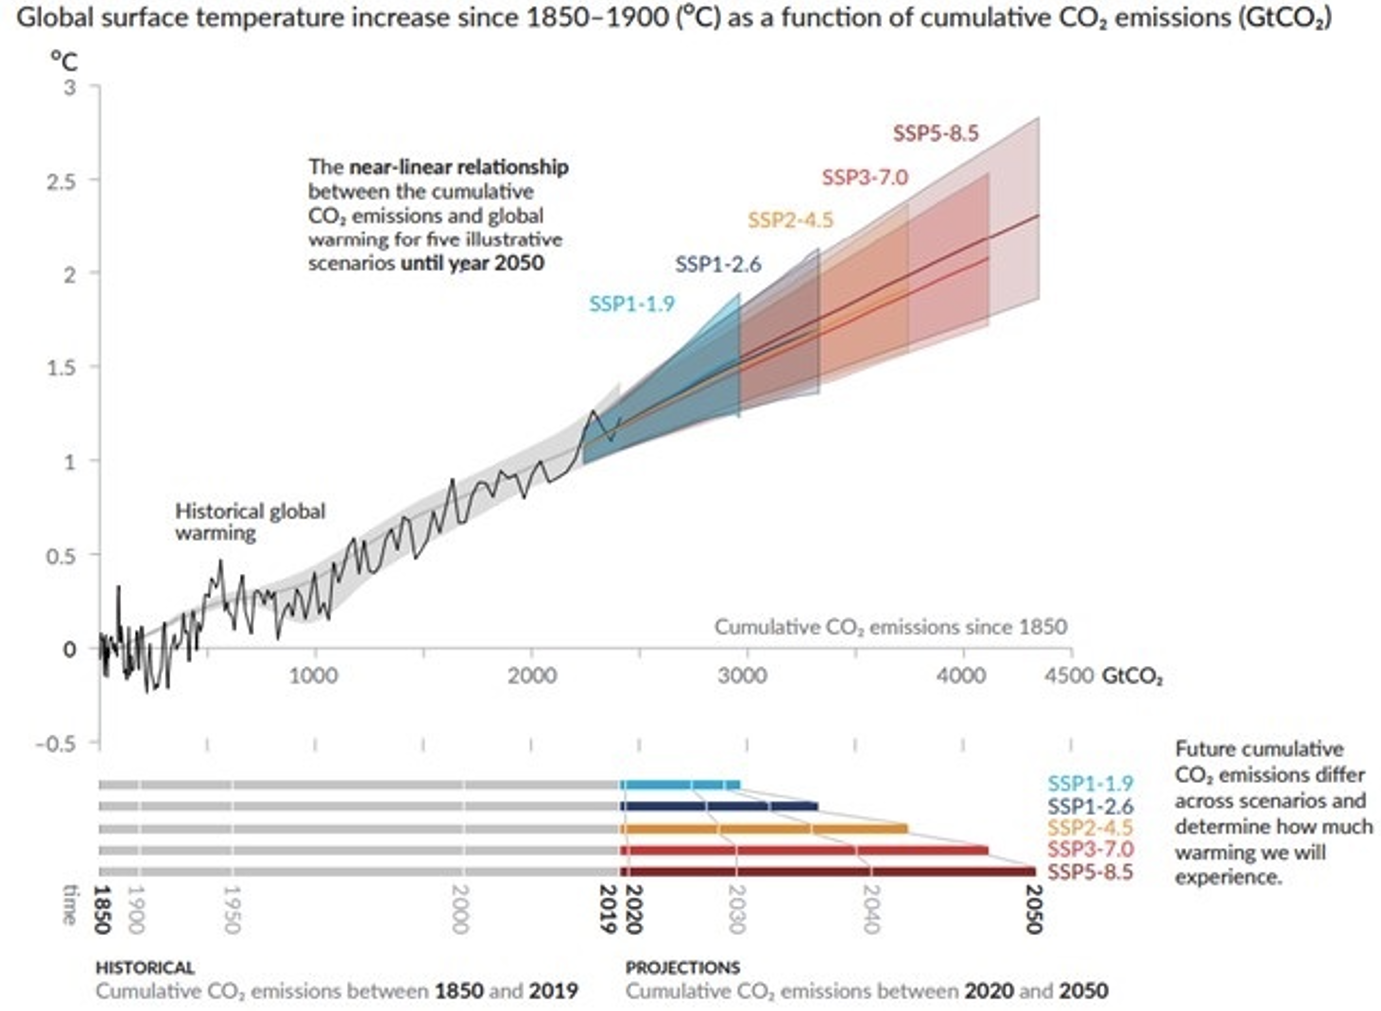 Source: IPCC - Climate Change 2021